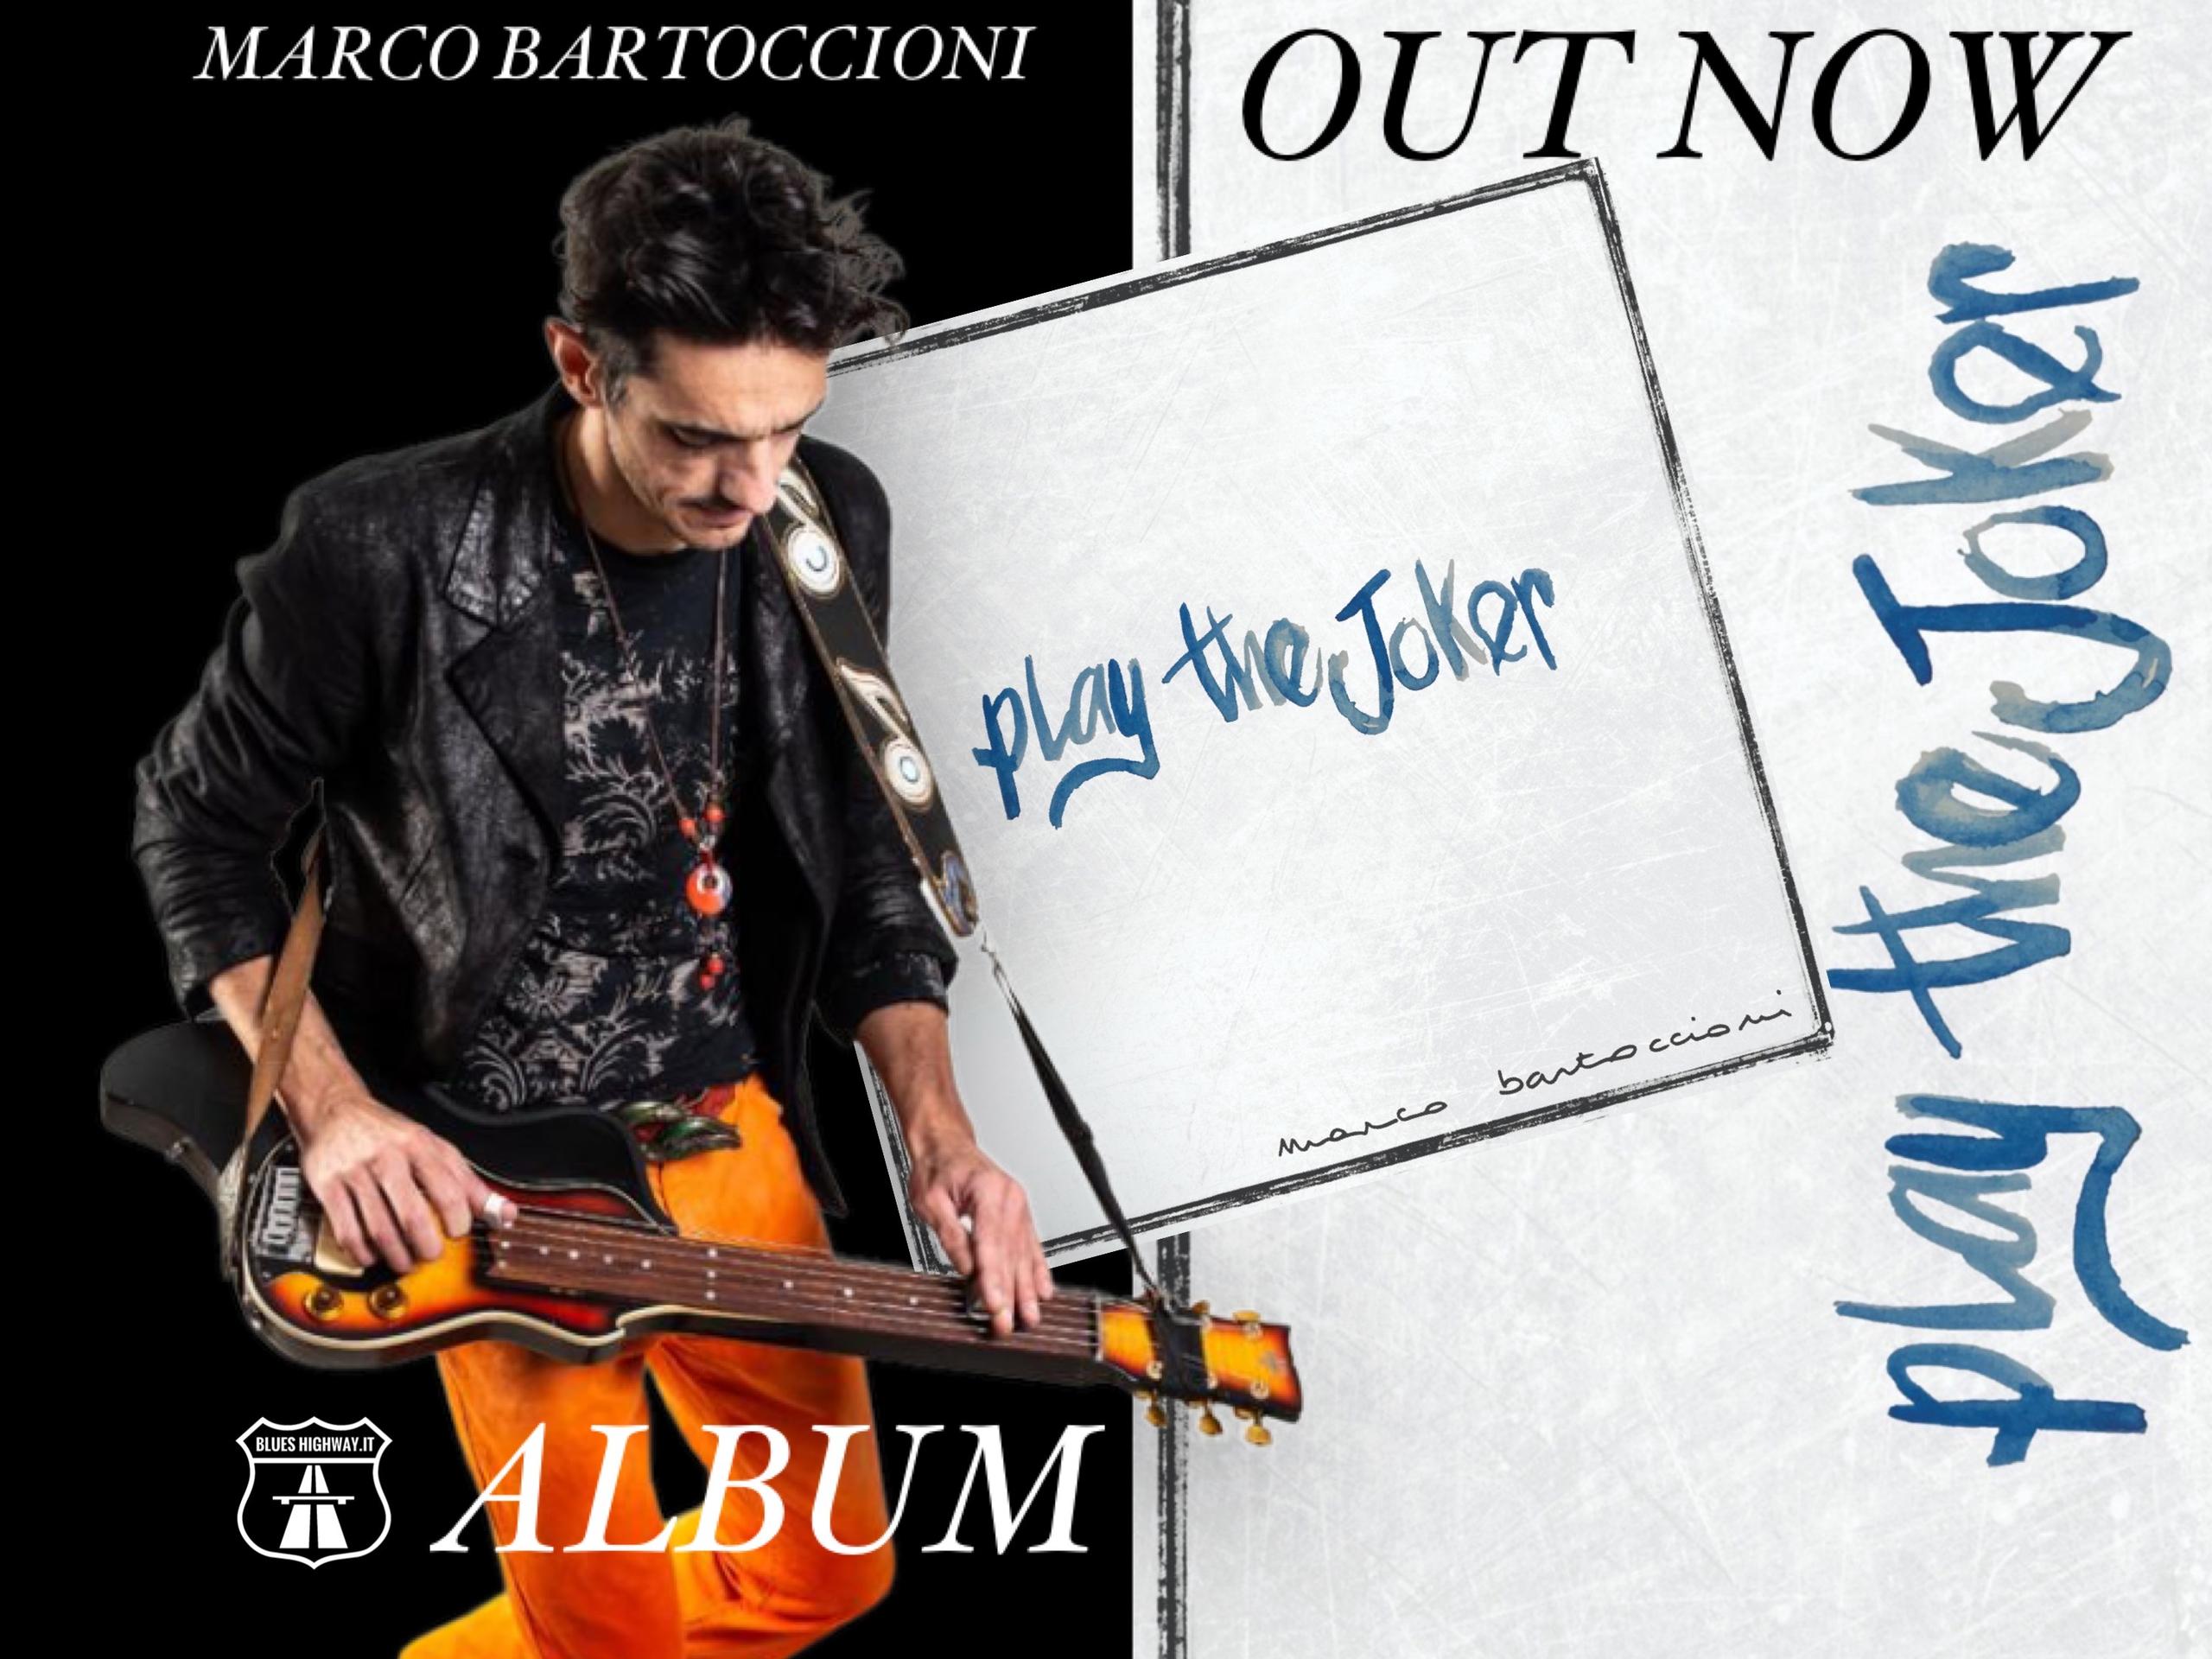 MARCO BARTOCCIONI L’album “Play the Joker”